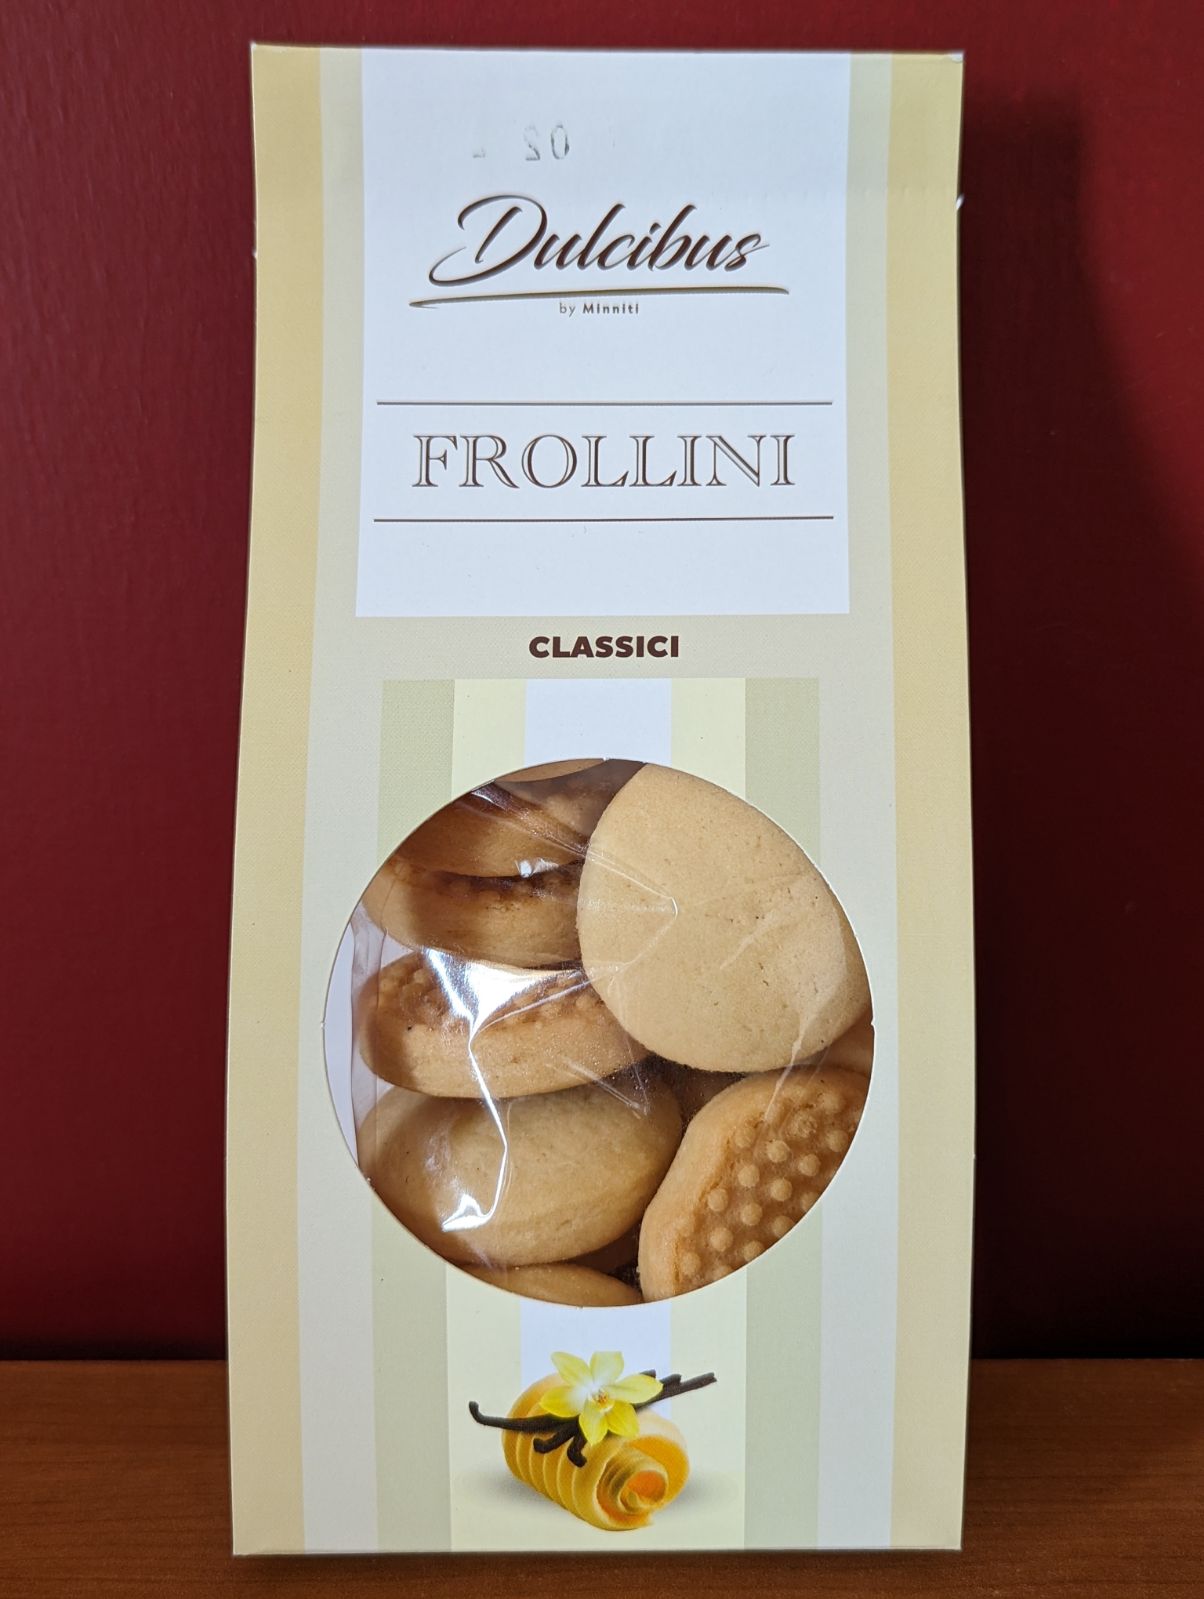 Frollini Classici Dulcibus by Minniti